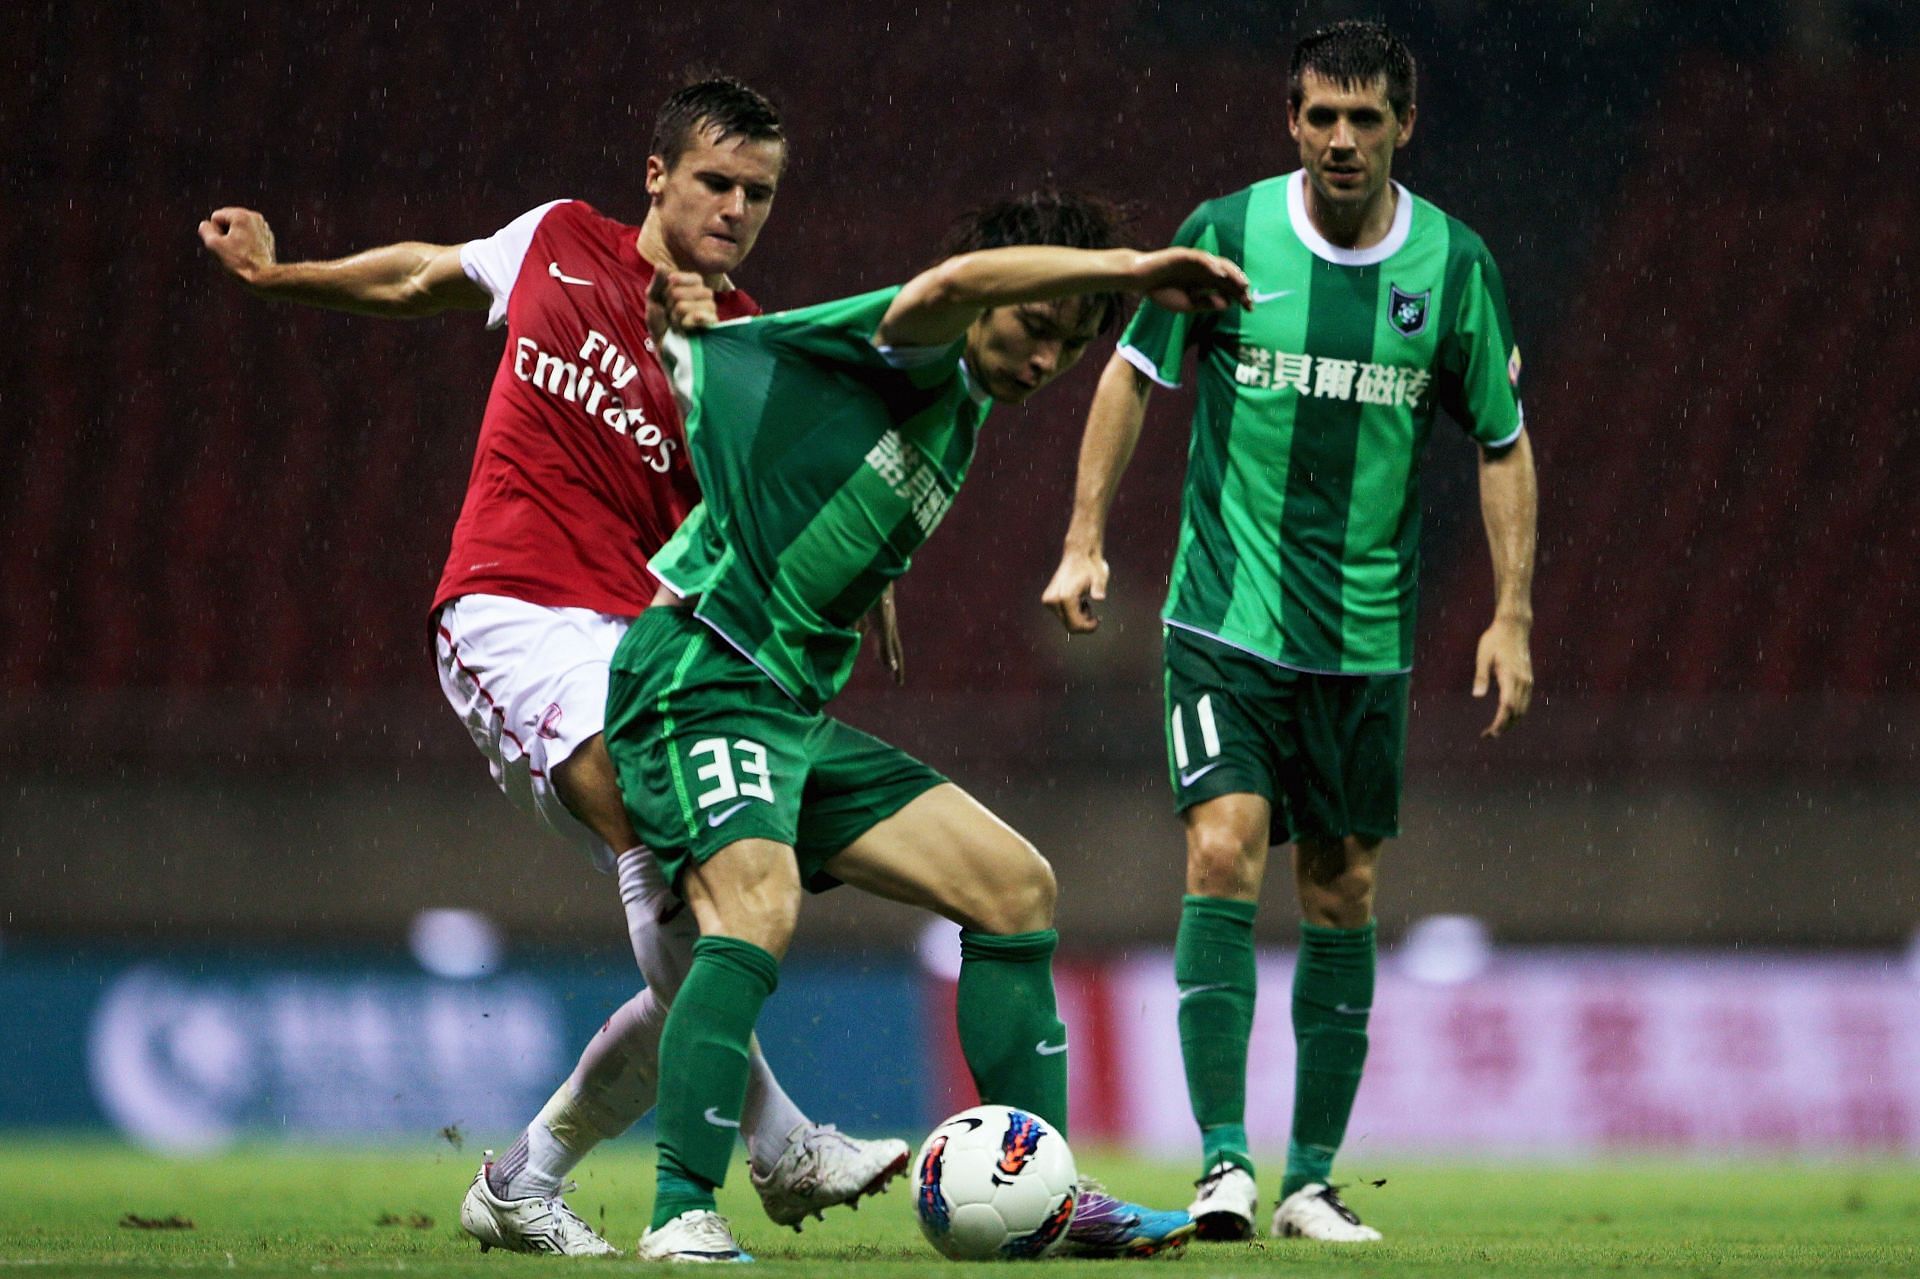 Zhejiang Professional v Arsenal in a friendly match